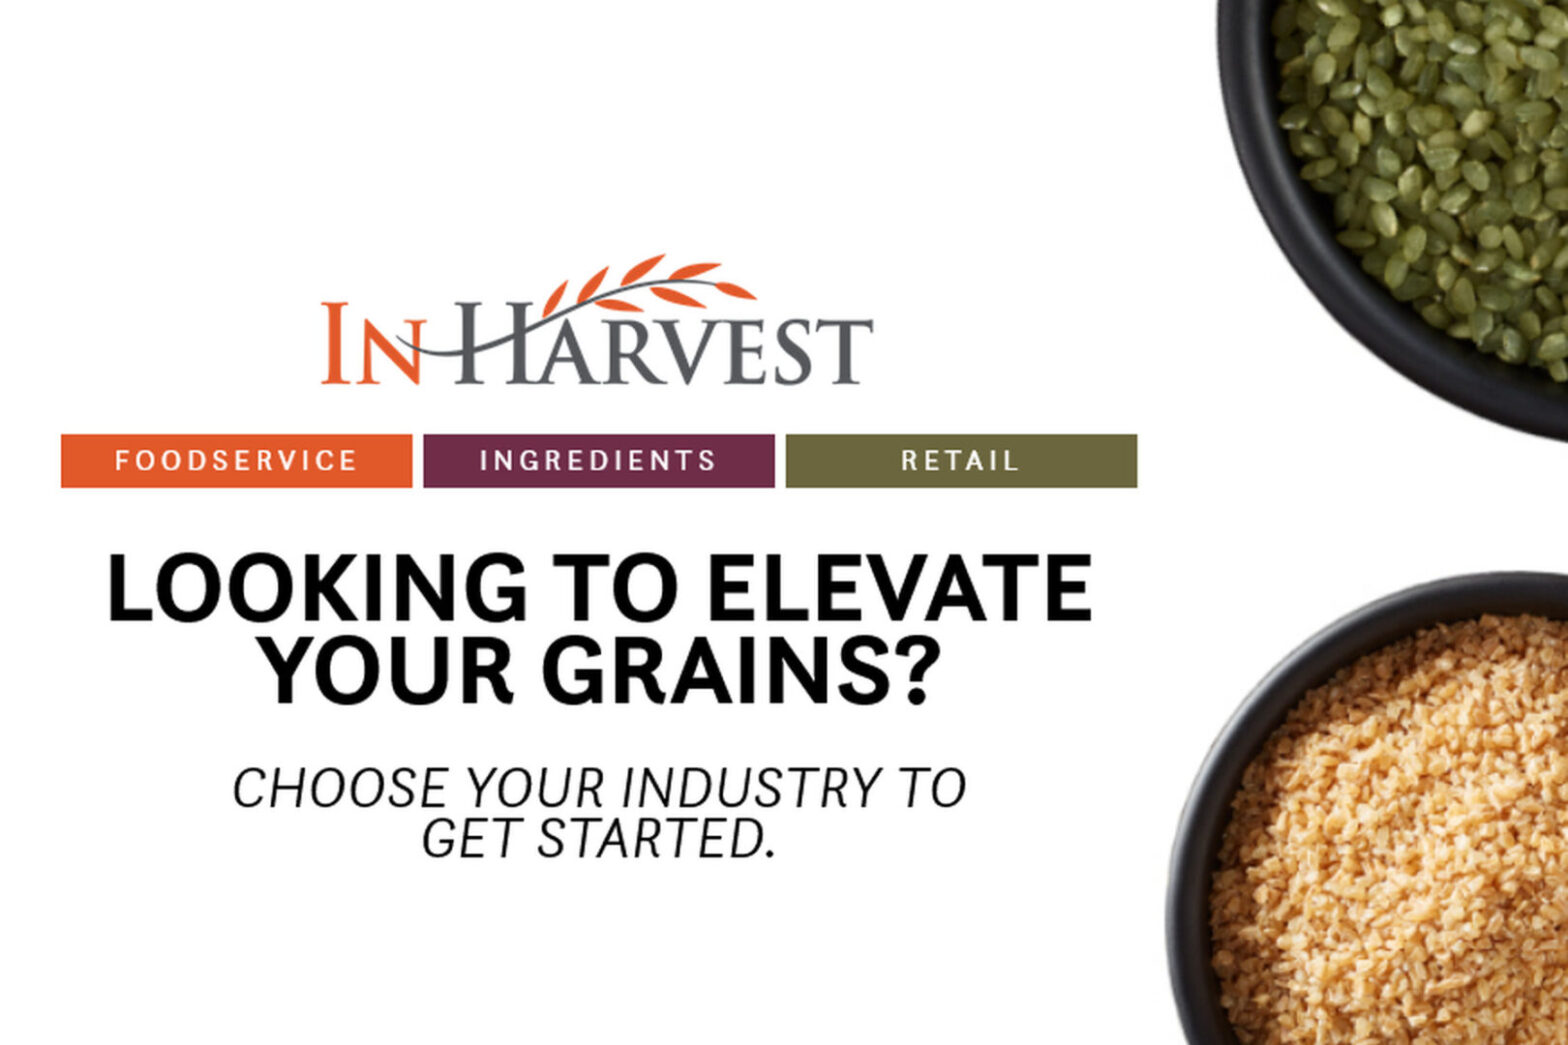 inharvest grains acquired